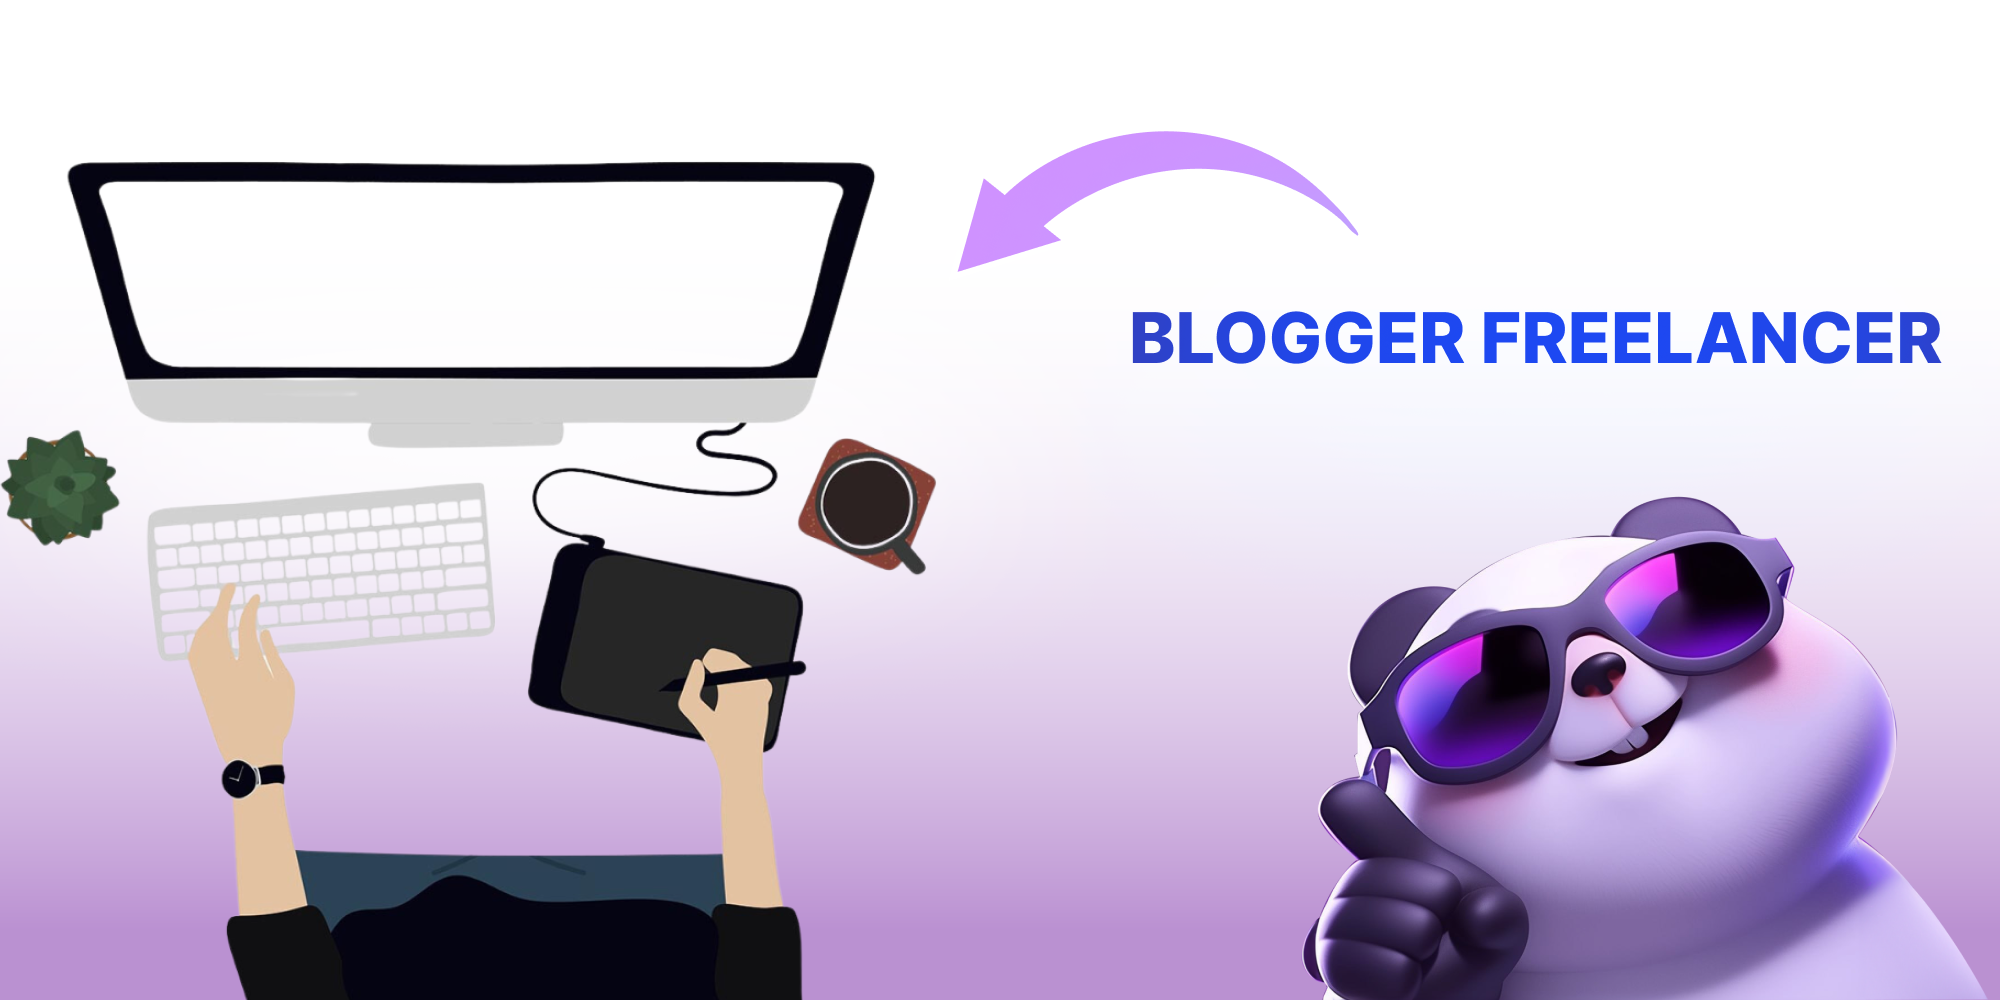 Viết bài blogger freelancer